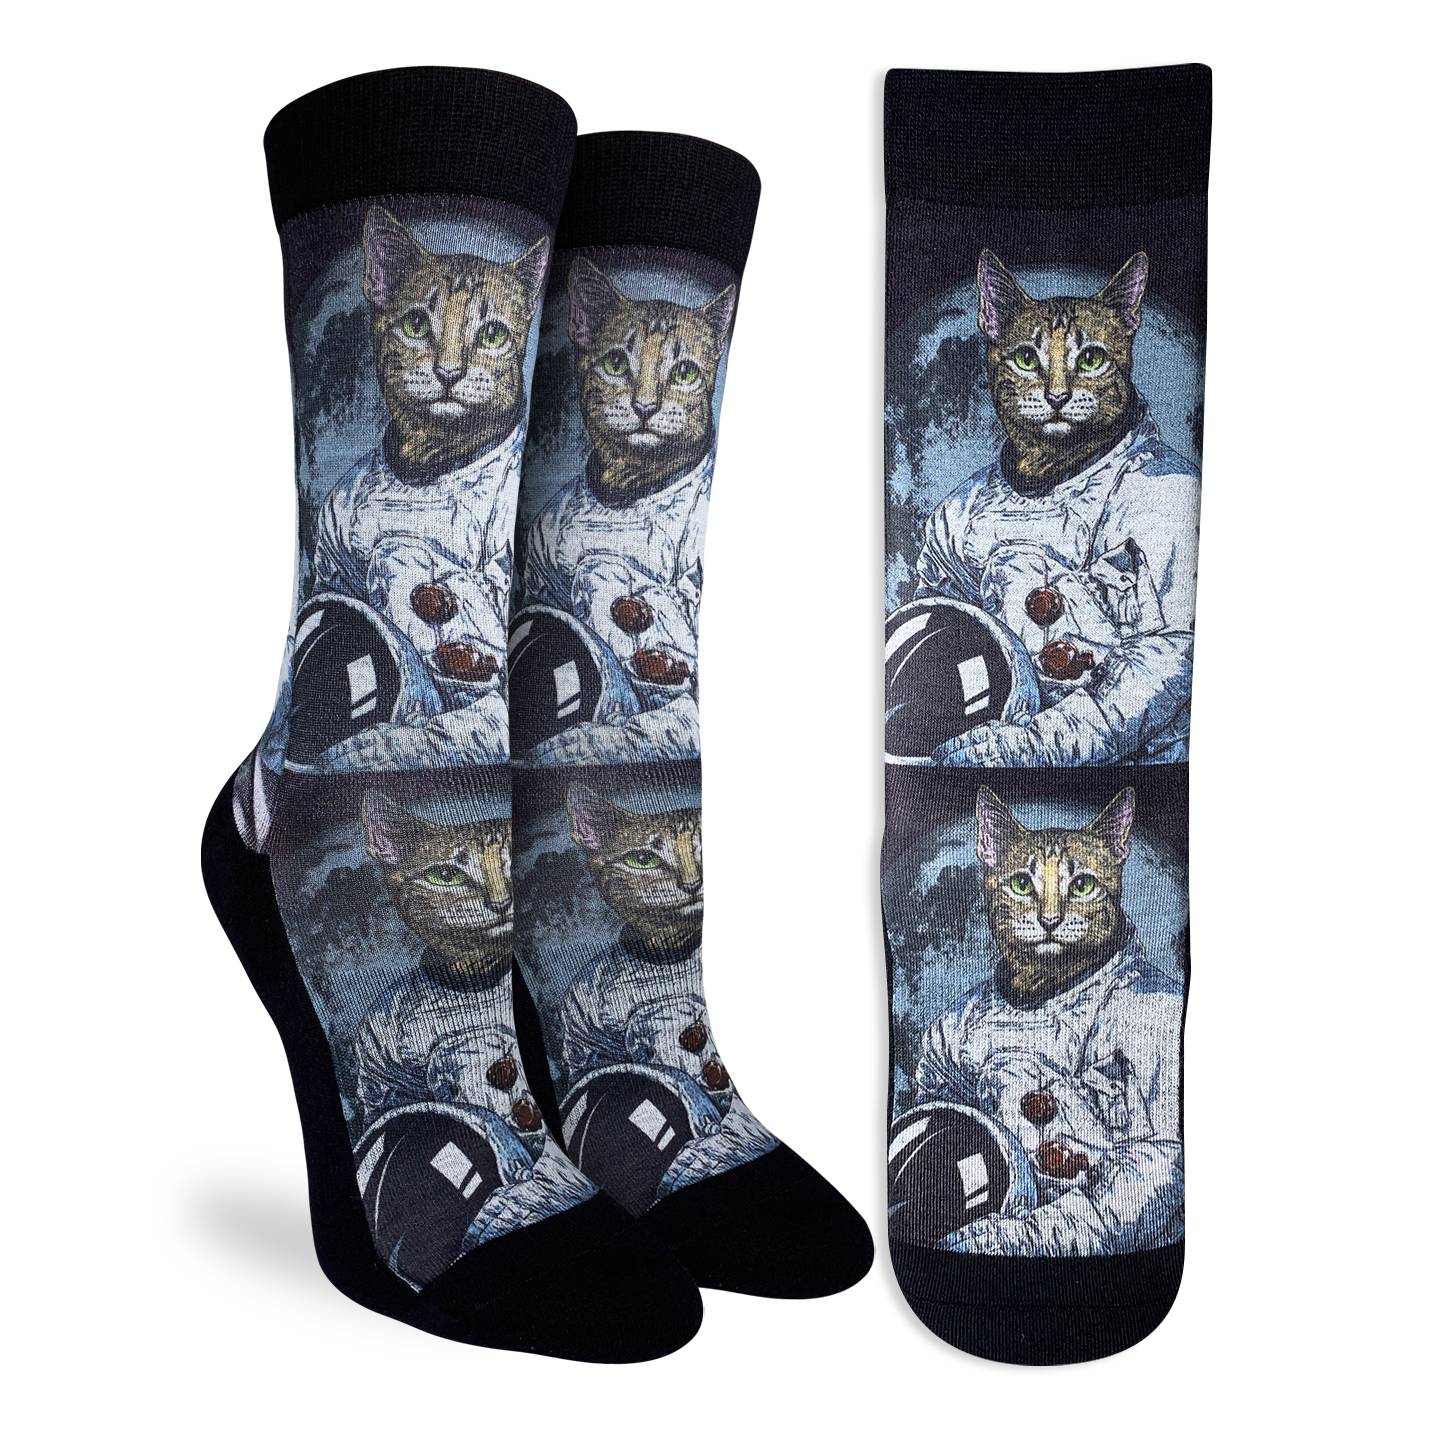 Women's Astronaut Cat Socks